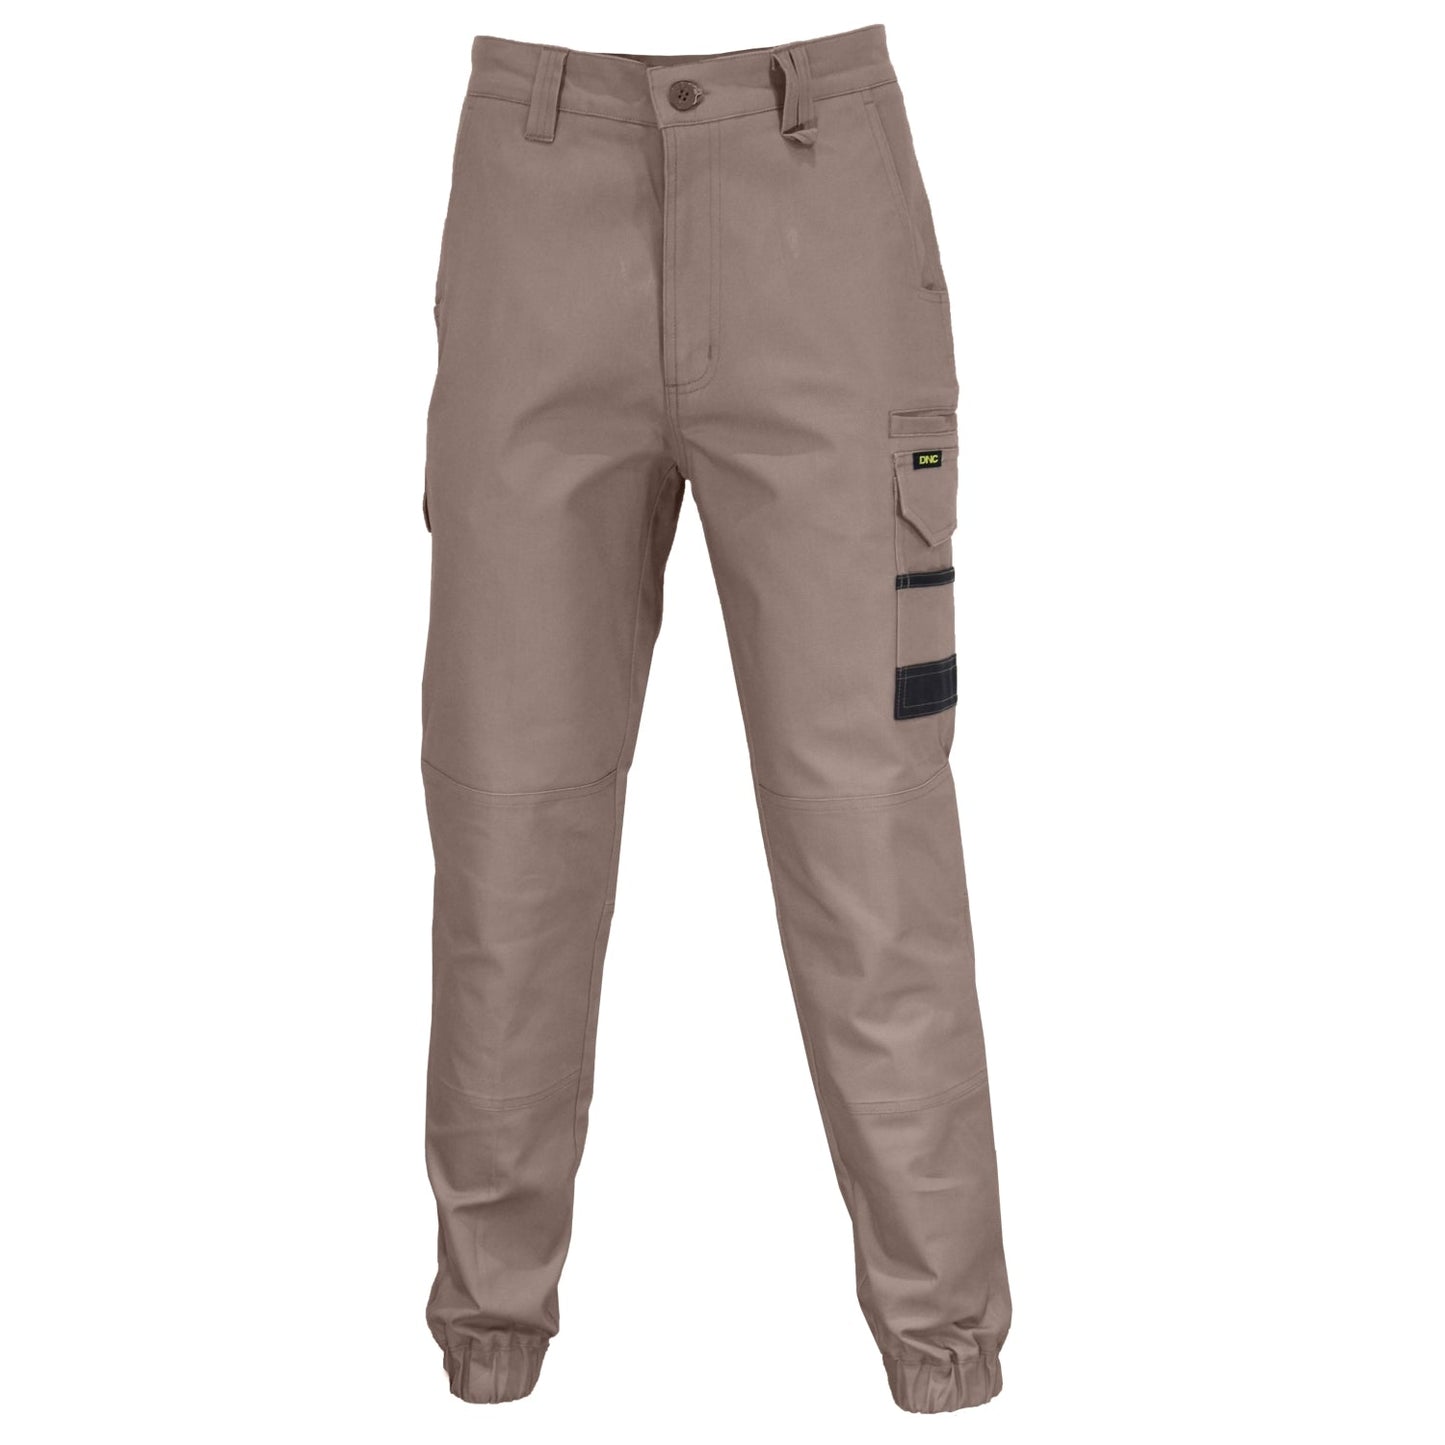 Slimflex Tradie Cargo Pants - E 3376 Work Wear DNC Workwear Khaki 72R 